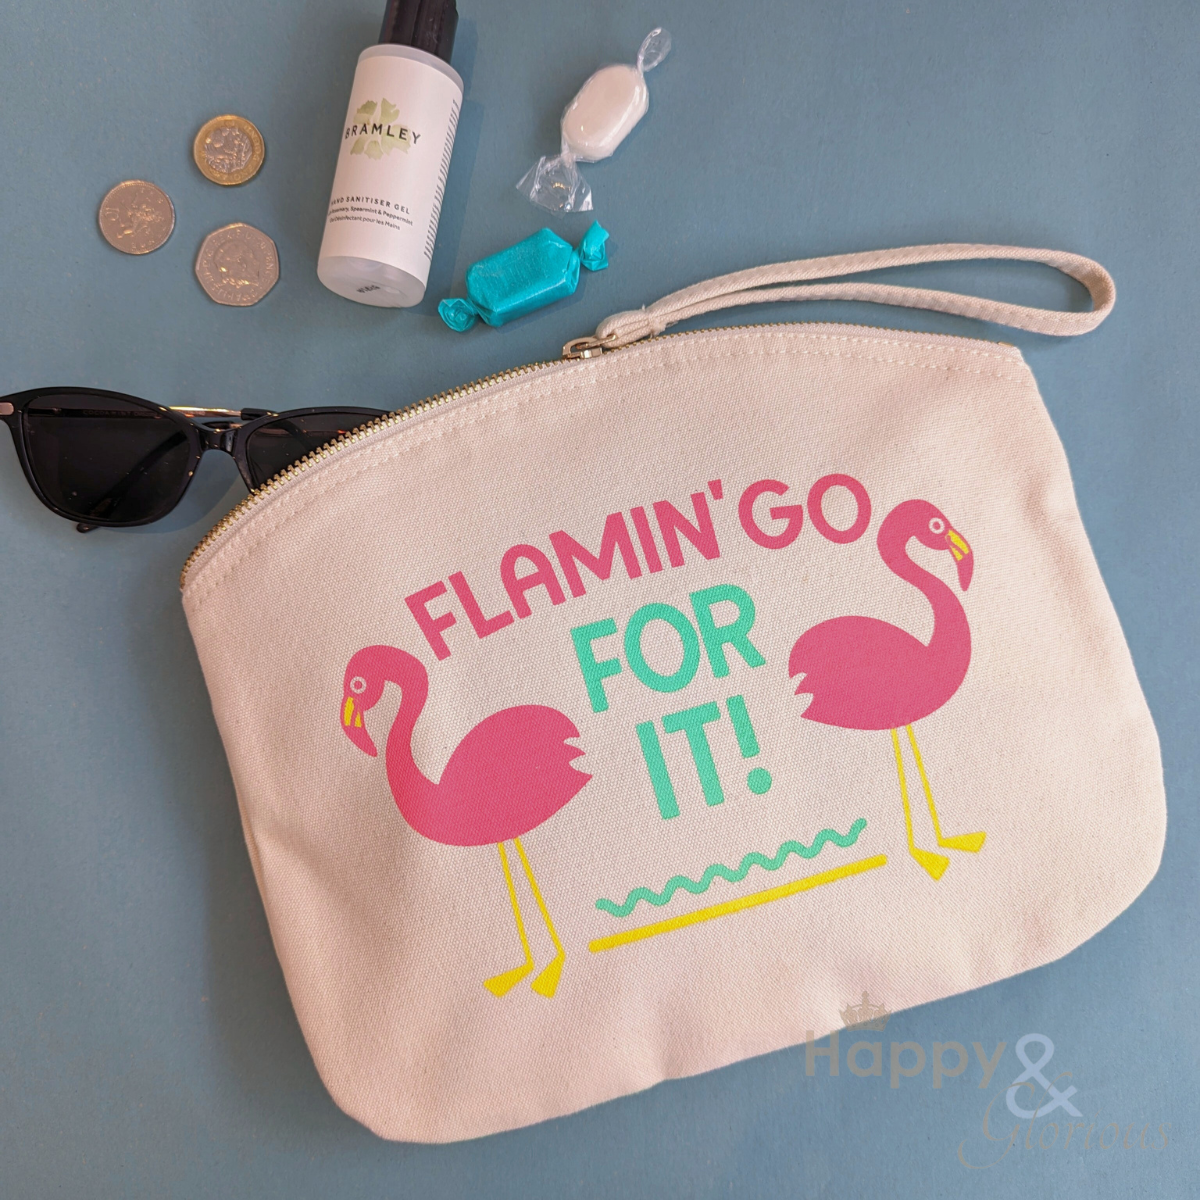 Flamin'go for it organic cotton zip purse